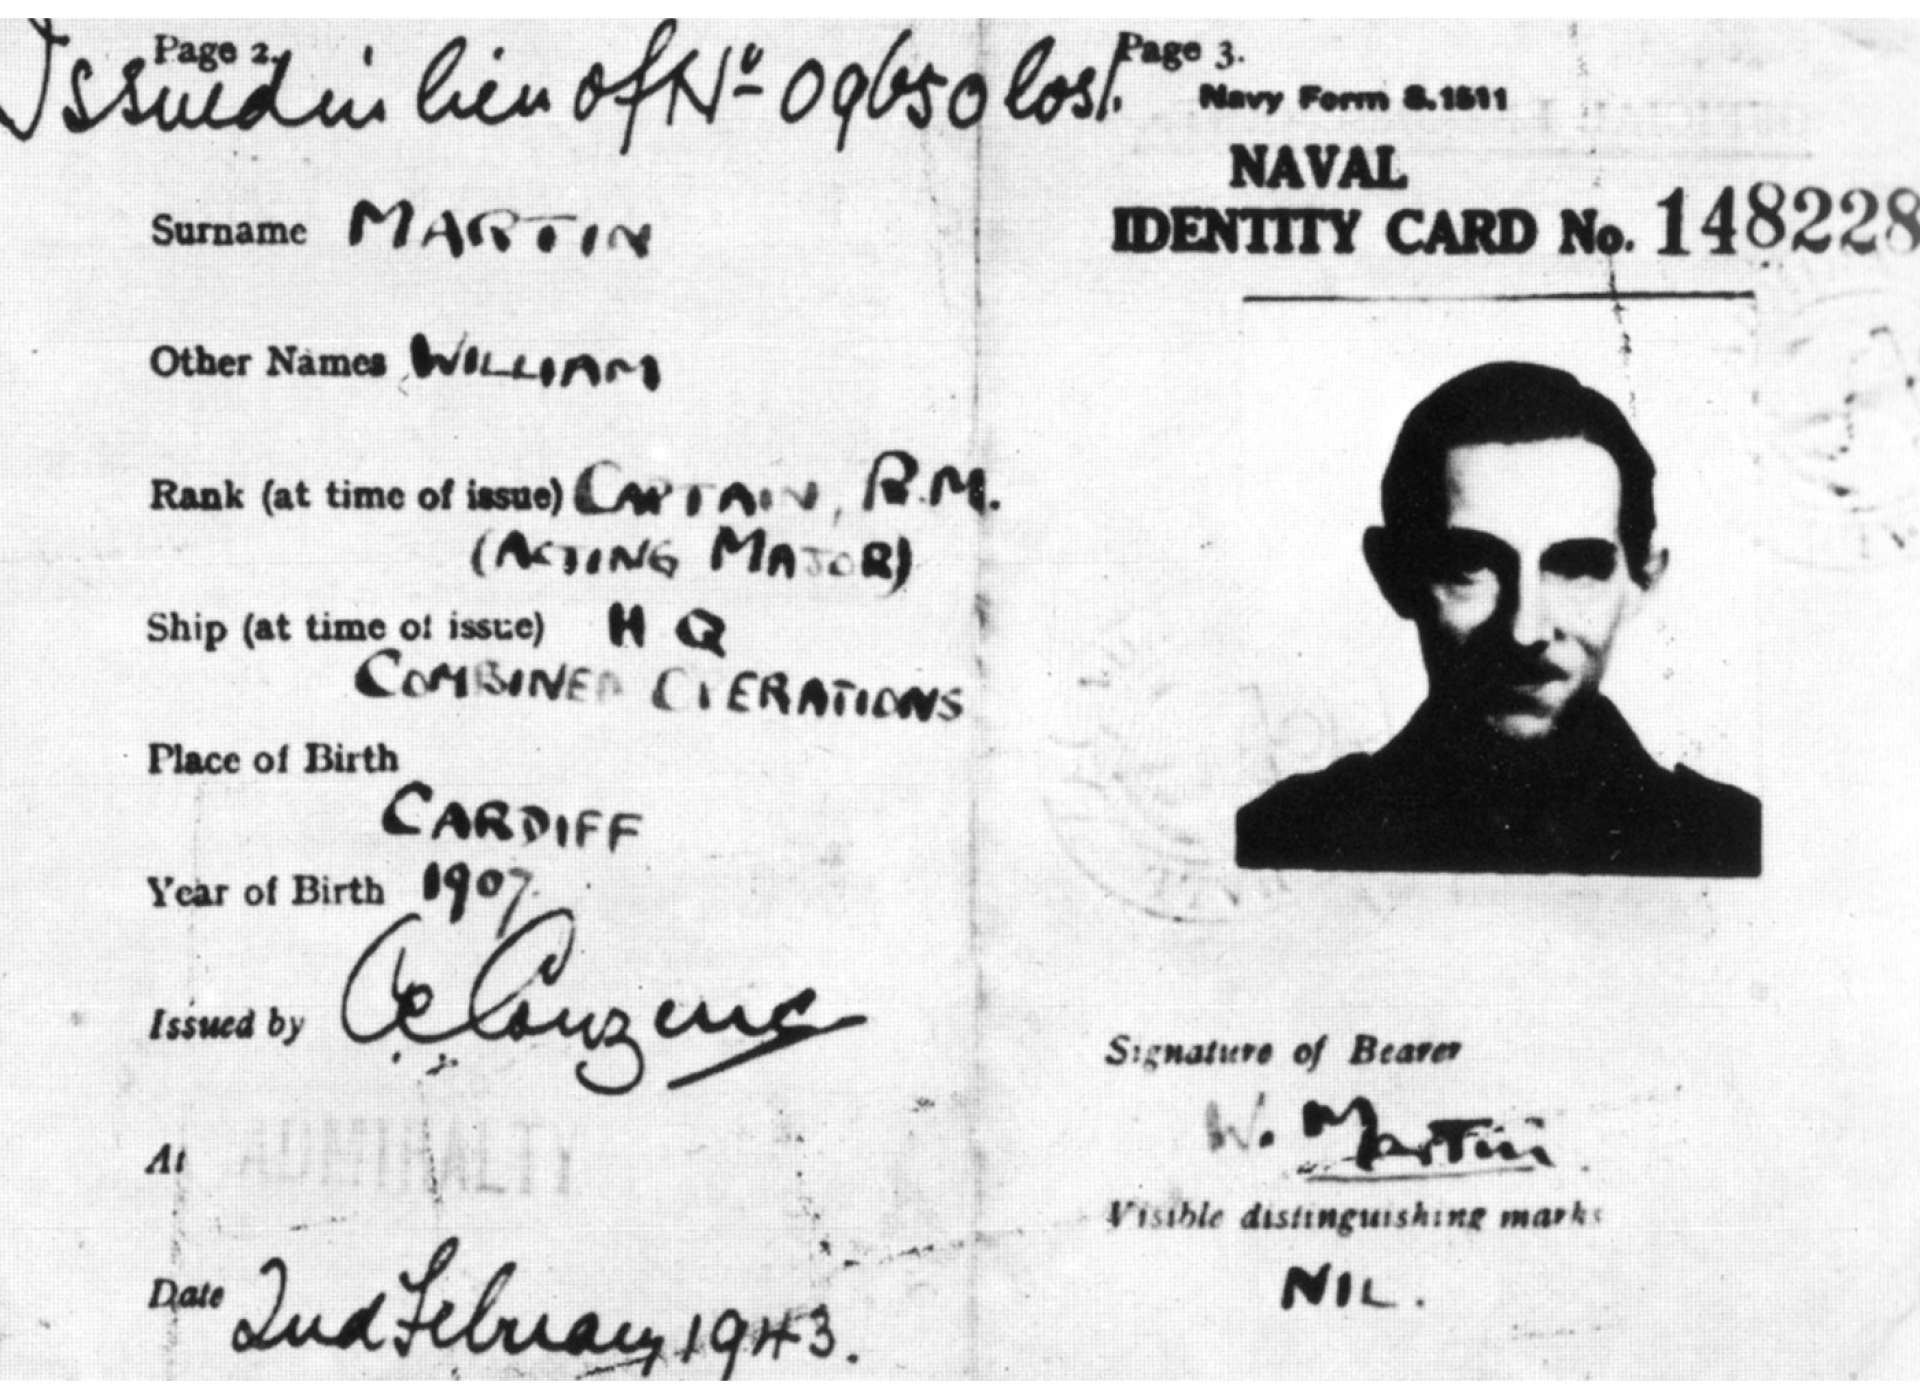 Major Martin&#039;s ID card